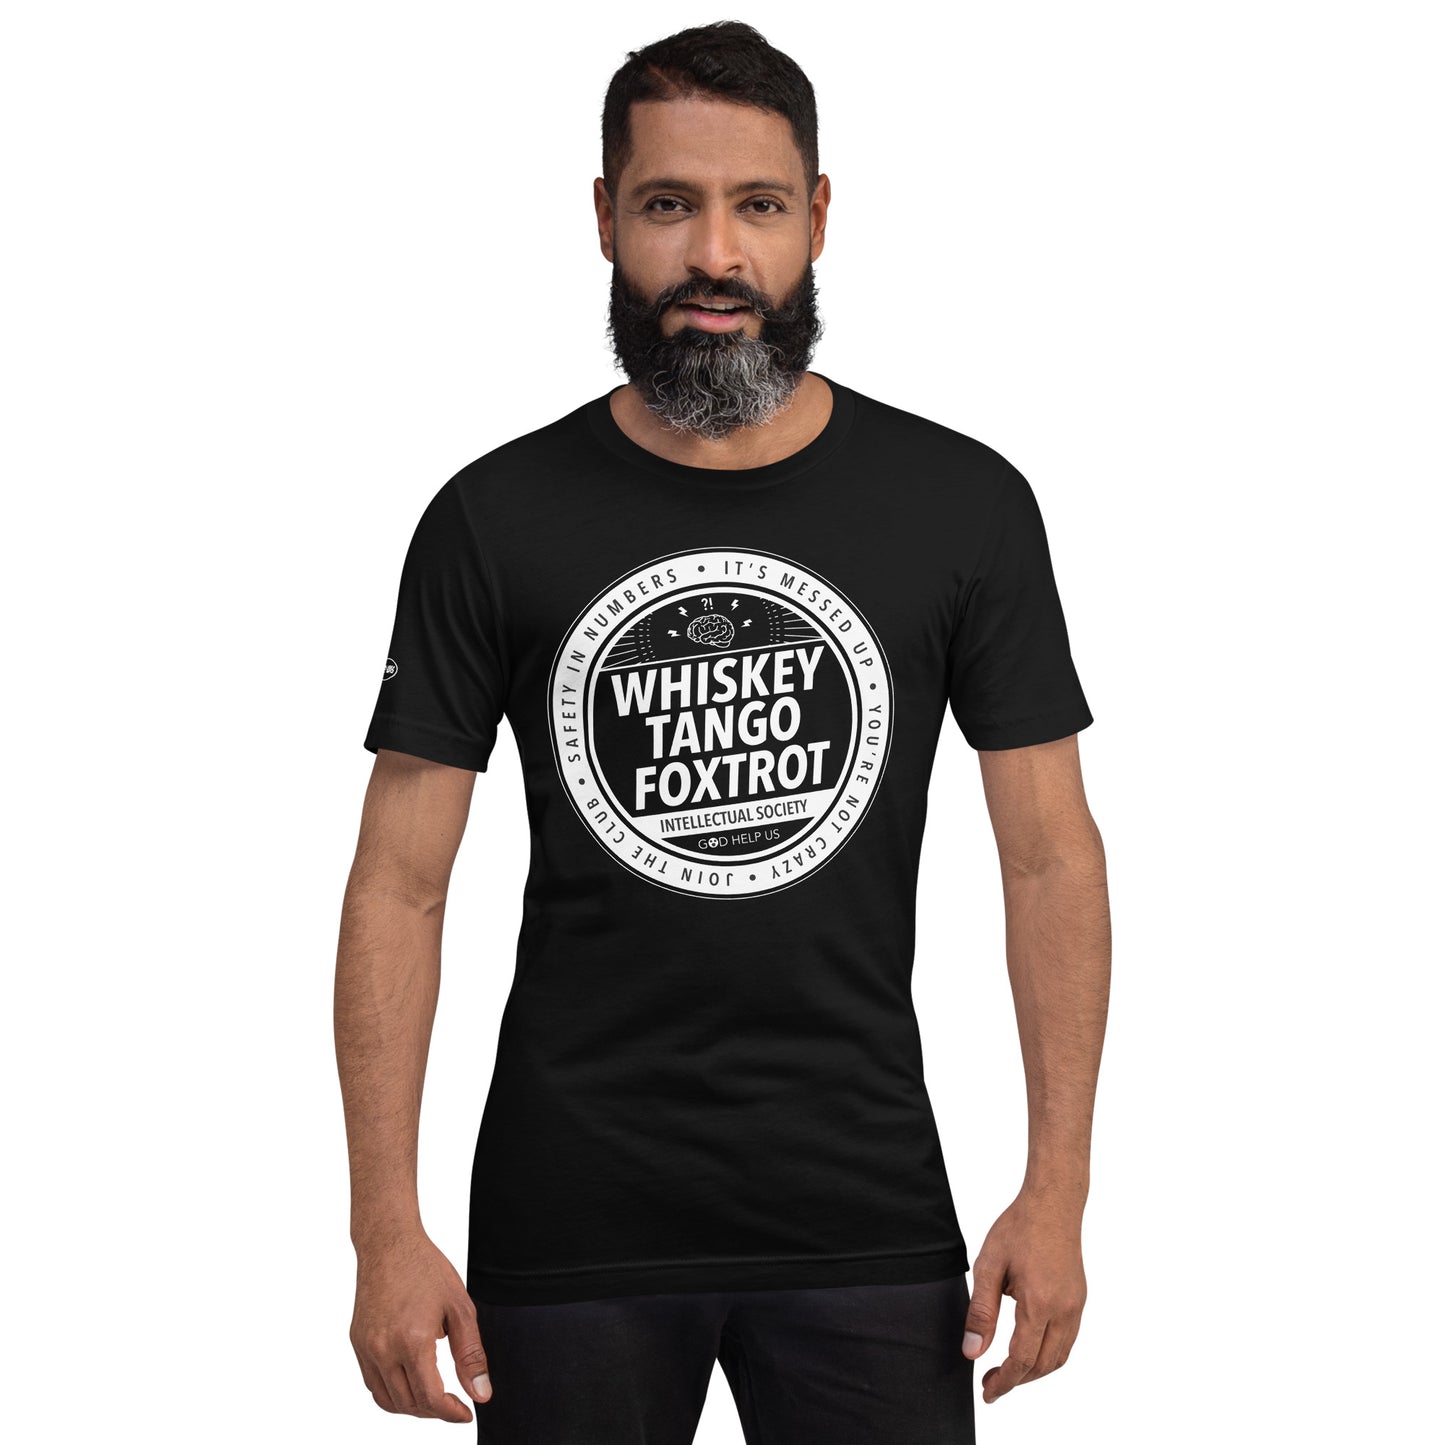 Whiskey Tango Foxtrot Intellectual Society - Funny T-shirt